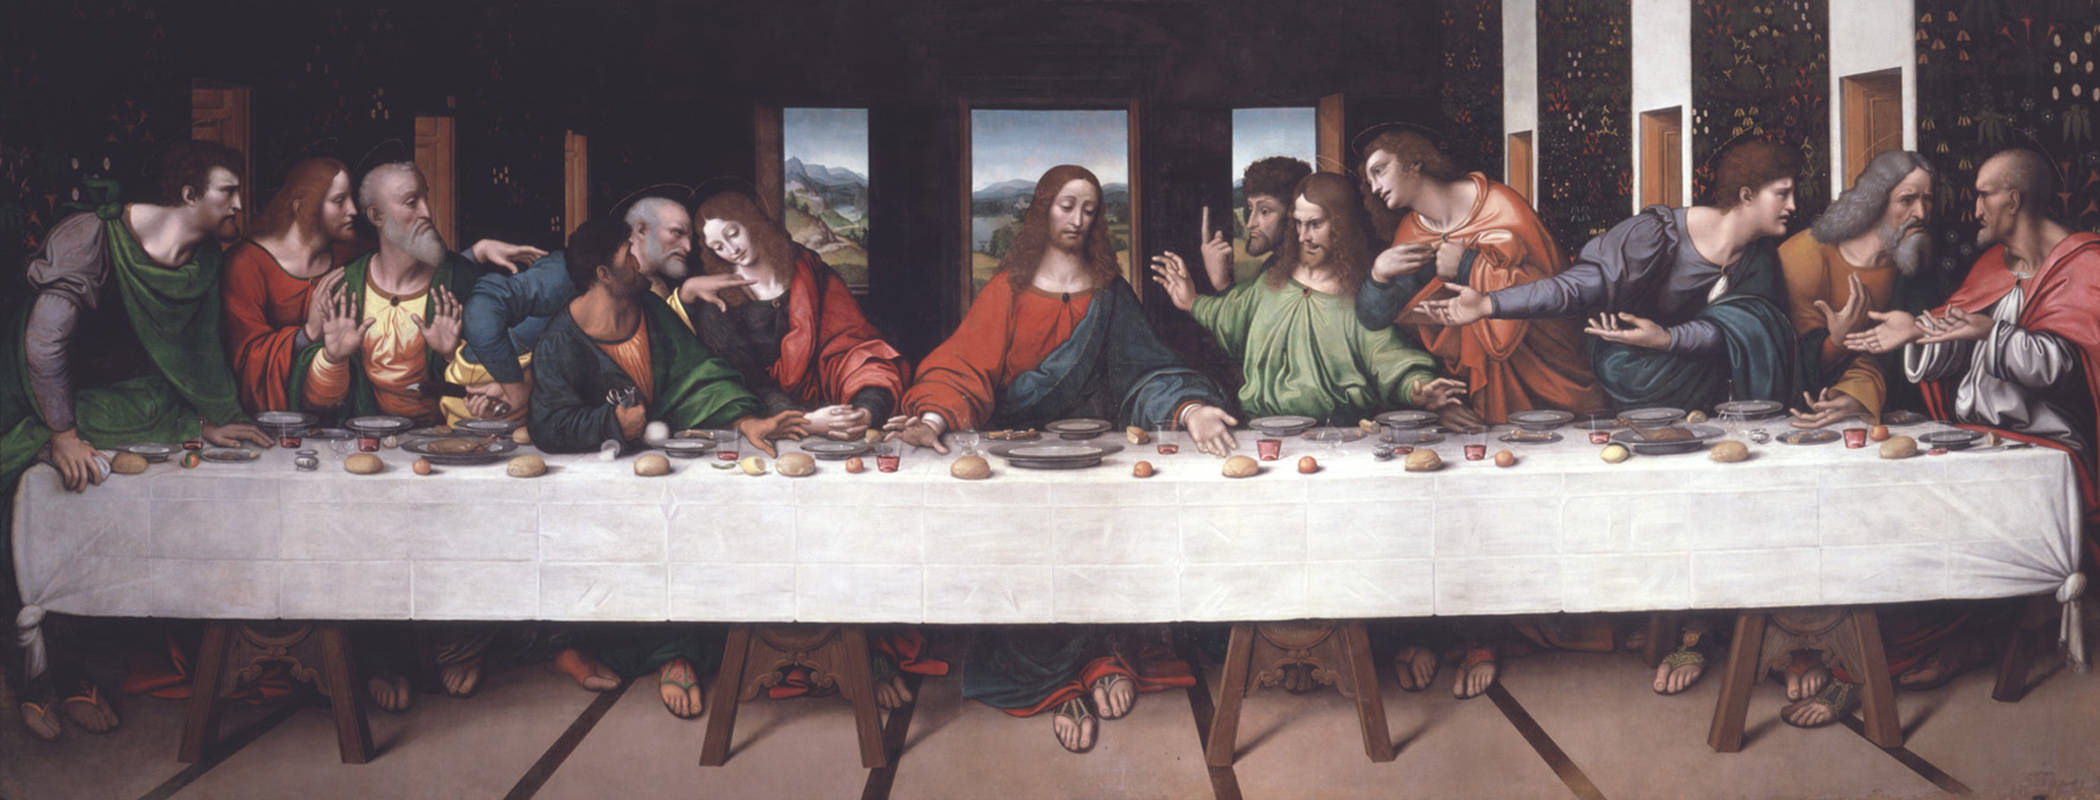 066-Giampietrino-Last-Supper-ca-1520.jpg